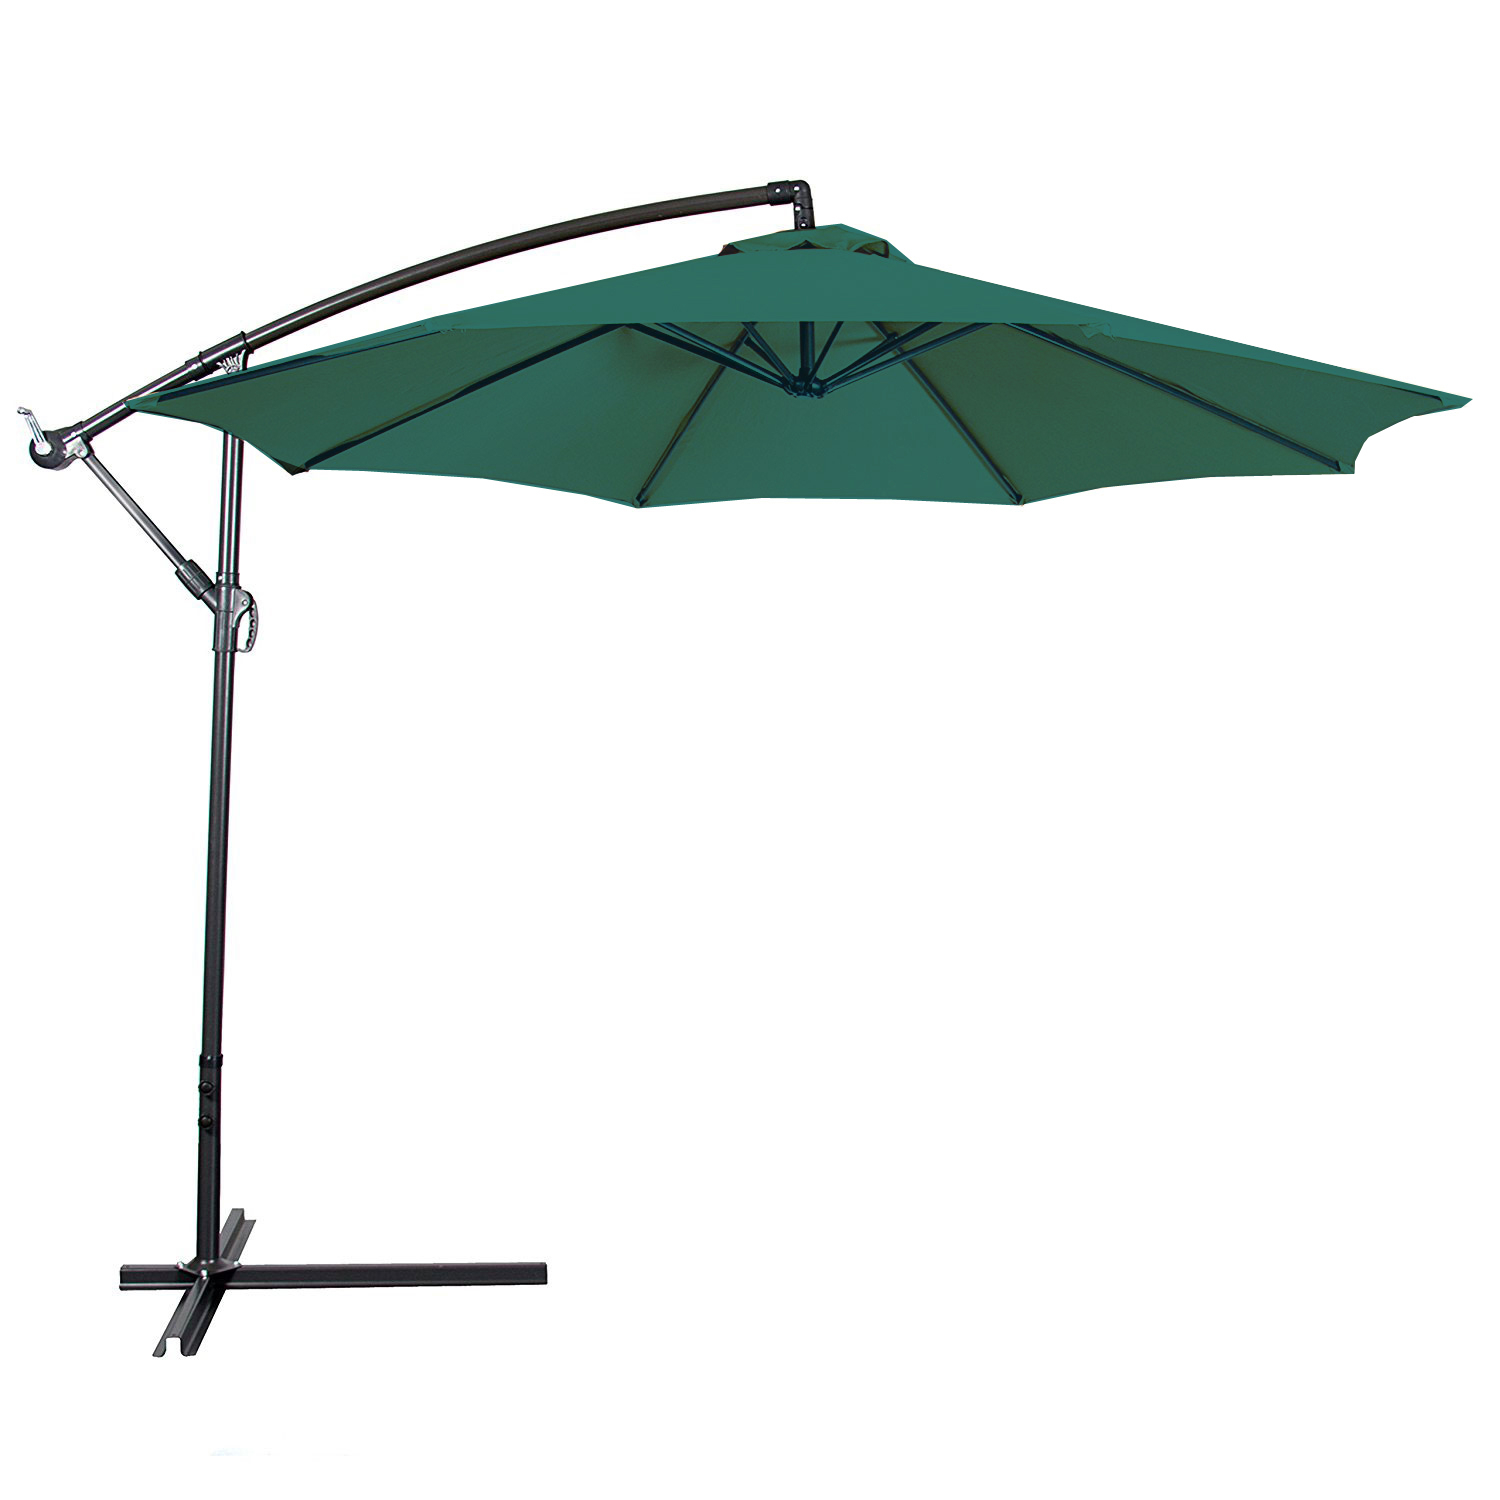 New Deluxe Burgundy 10' Offset Patio Umbrella Off Set Outdoor Market Umbrella